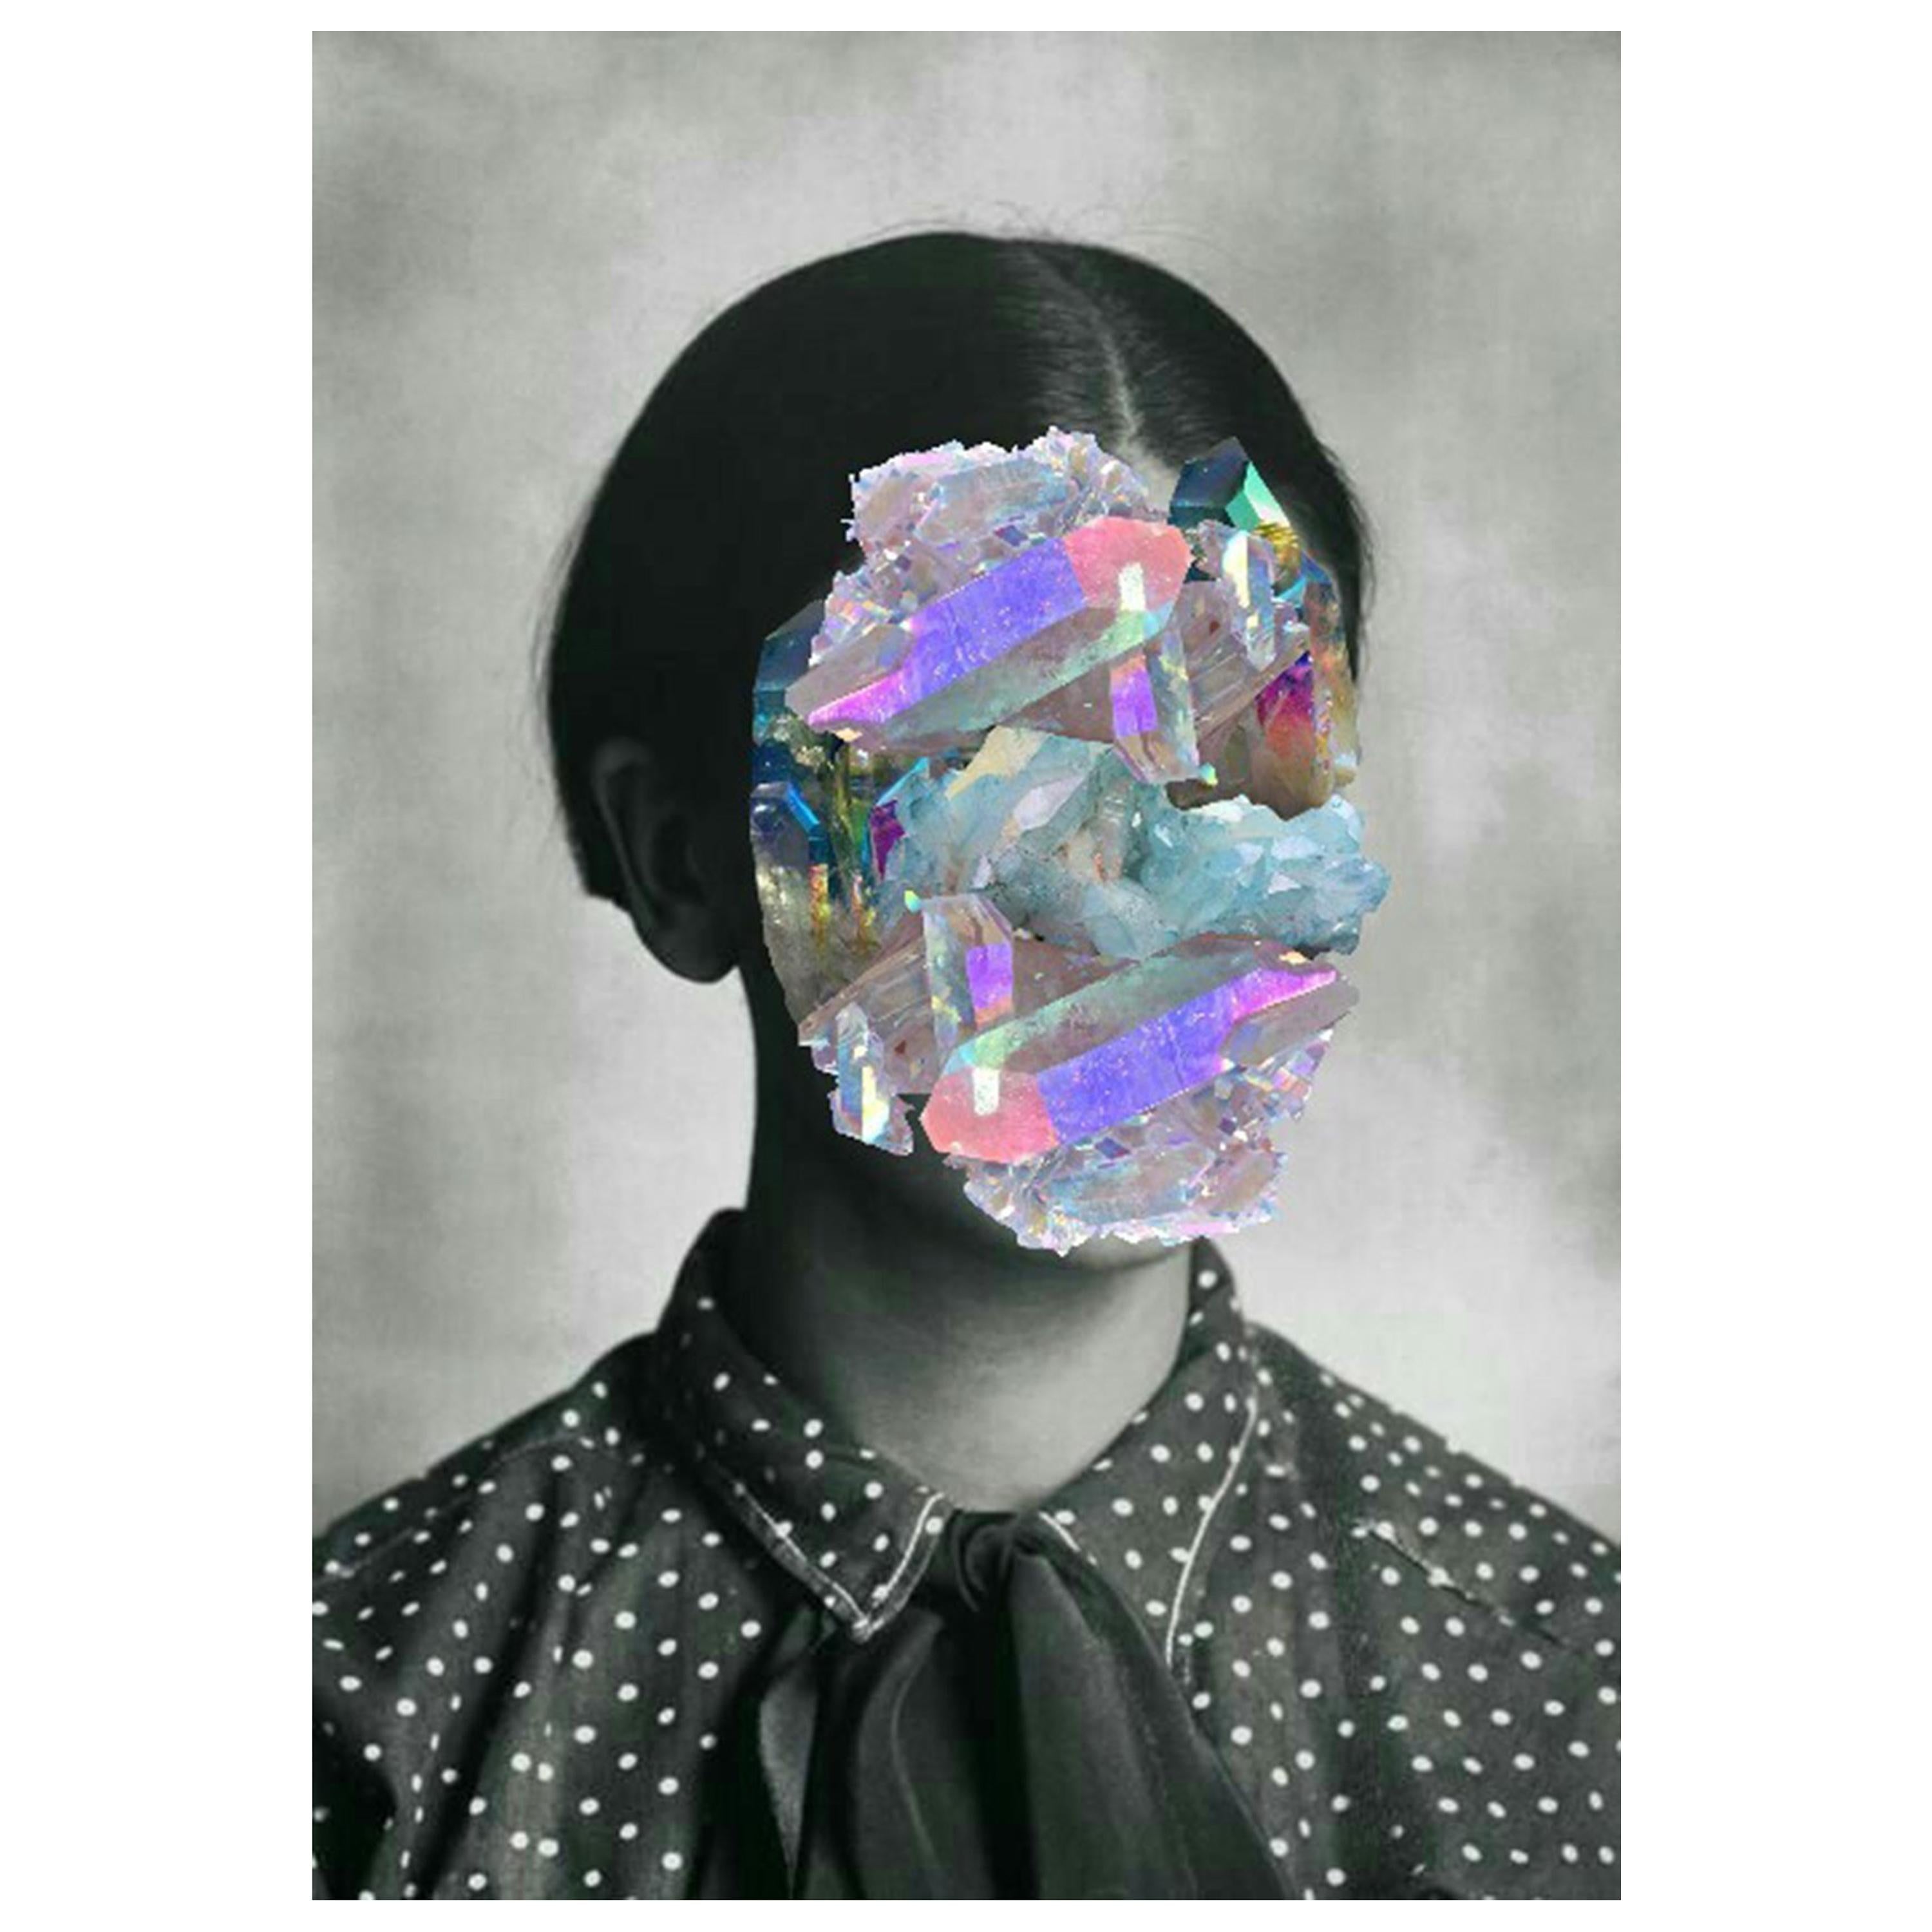 Crystal Woman Portrait Naro Pinosa, "Untitled" Digital Collage, Spain, 2018